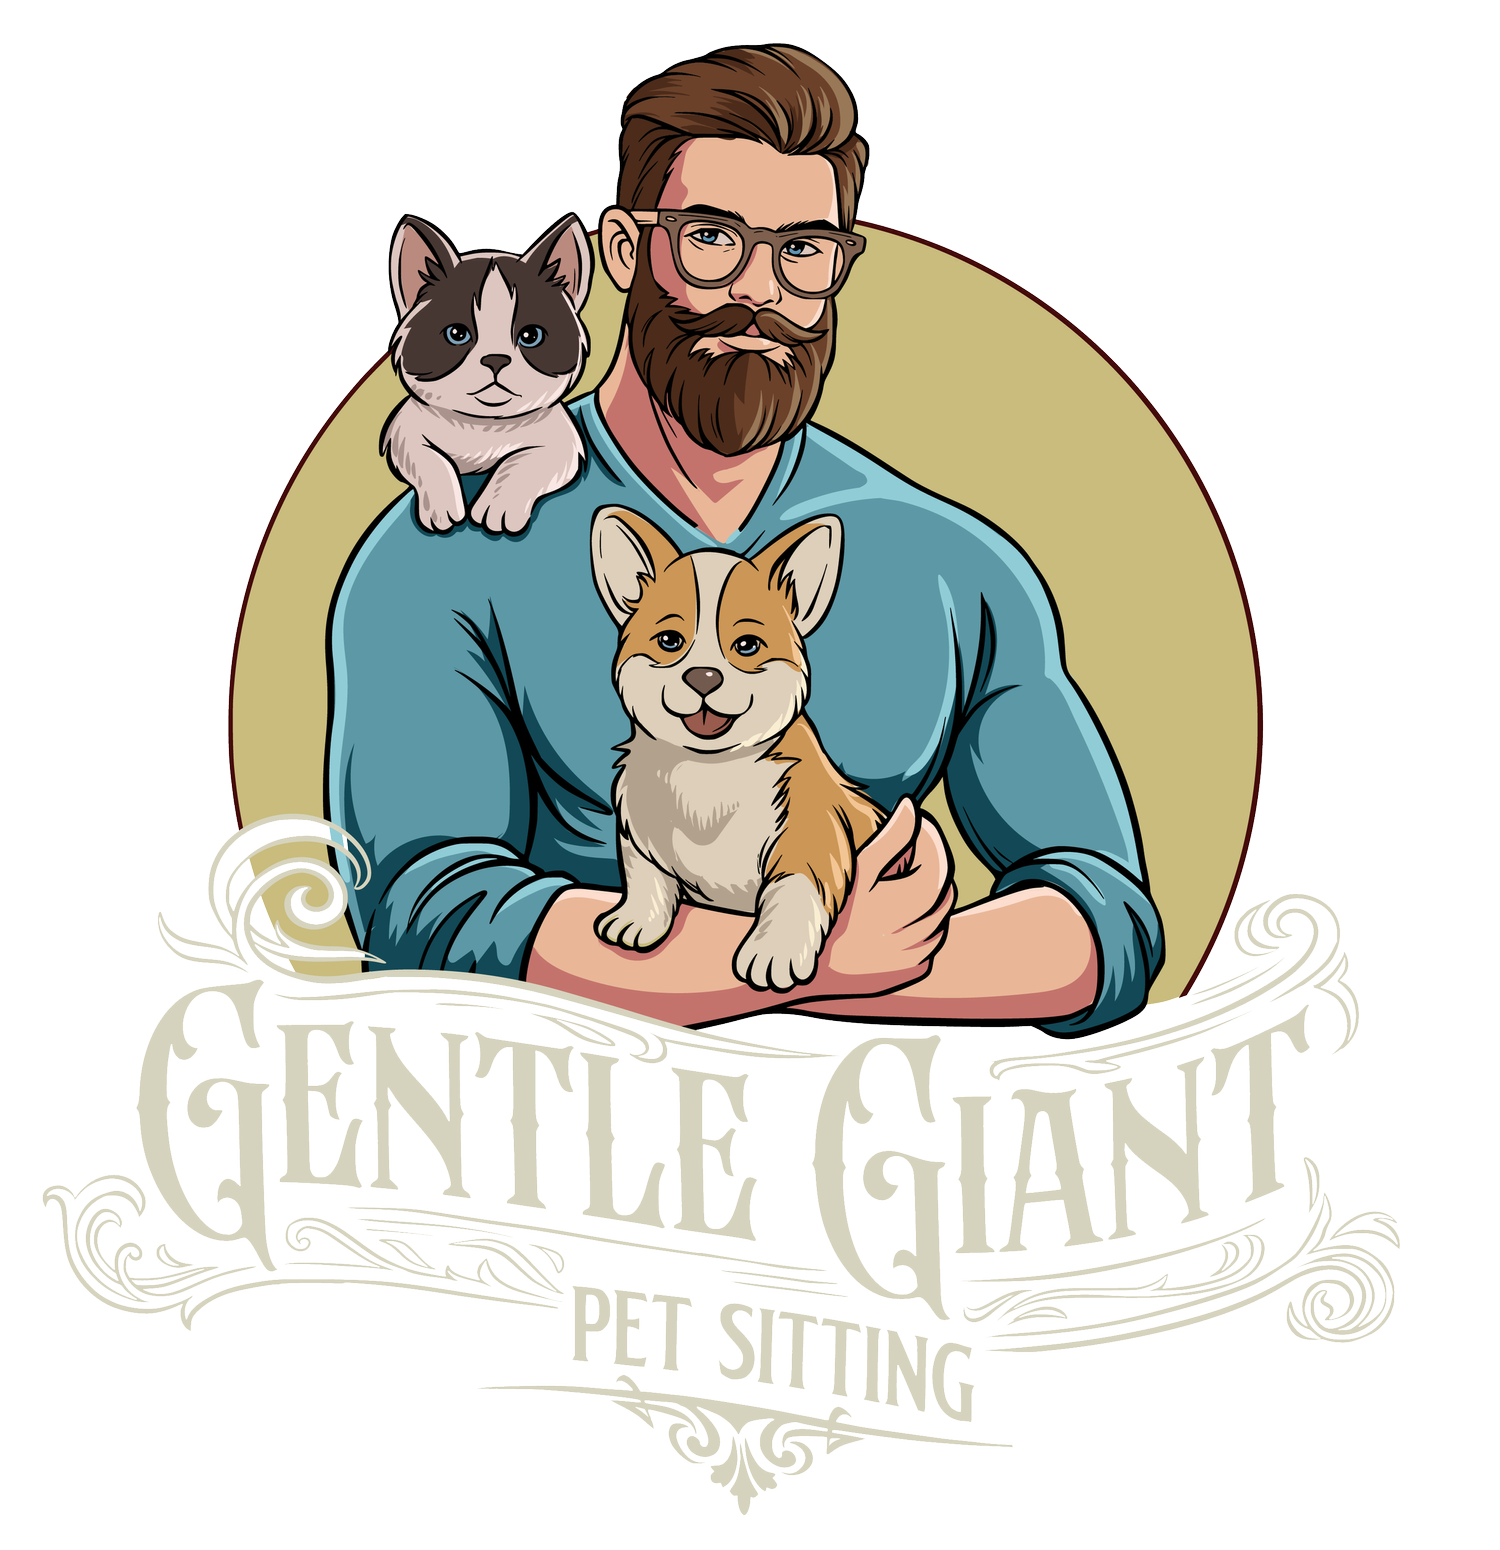 Gentle Giant Pet Sitting